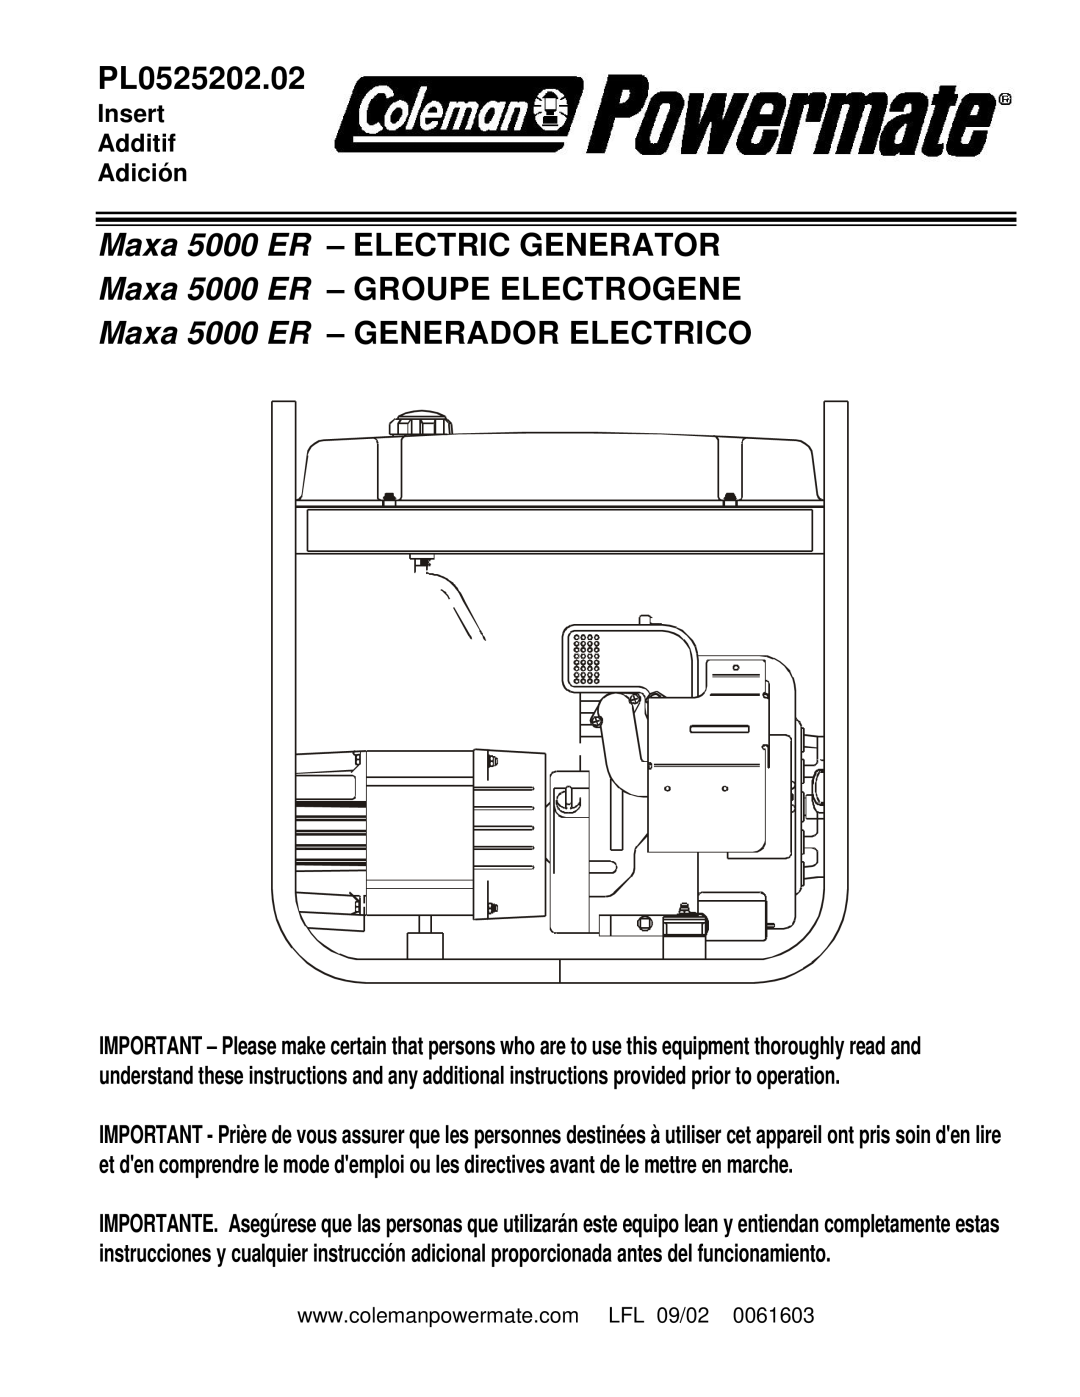 Powermate PL0525202.02 manual Maxa 5000 ER - ELECTRIC GENERATOR, Maxa 5000 ER - GROUPE ELECTROGENE, Insert Additif Adición 